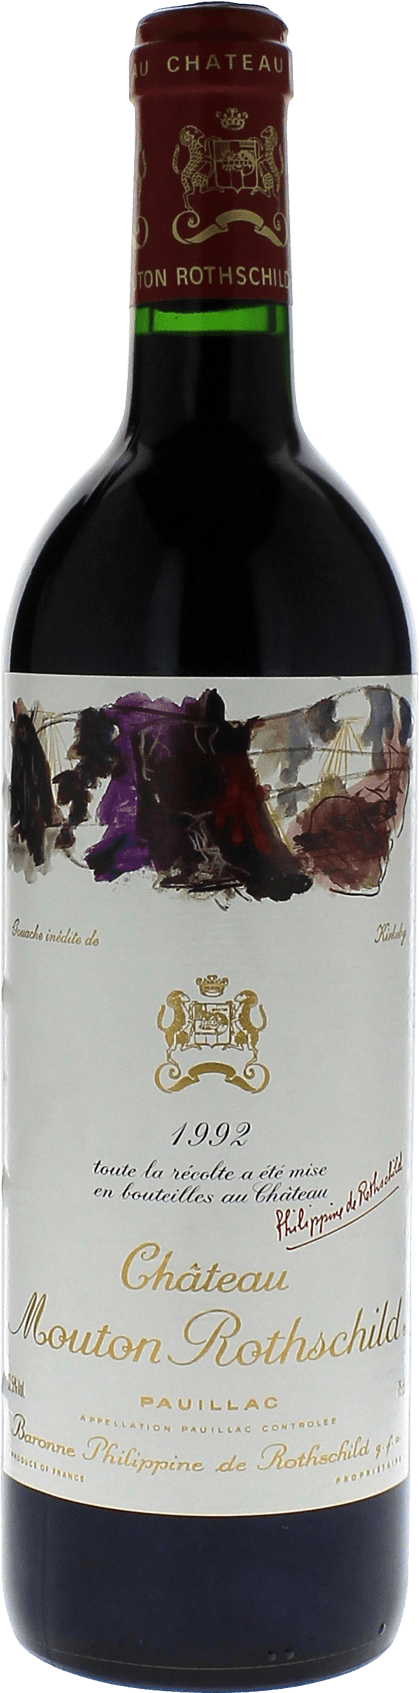 Mouton rothschild 1992 1er Grand cru class Pauillac, Bordeaux rouge